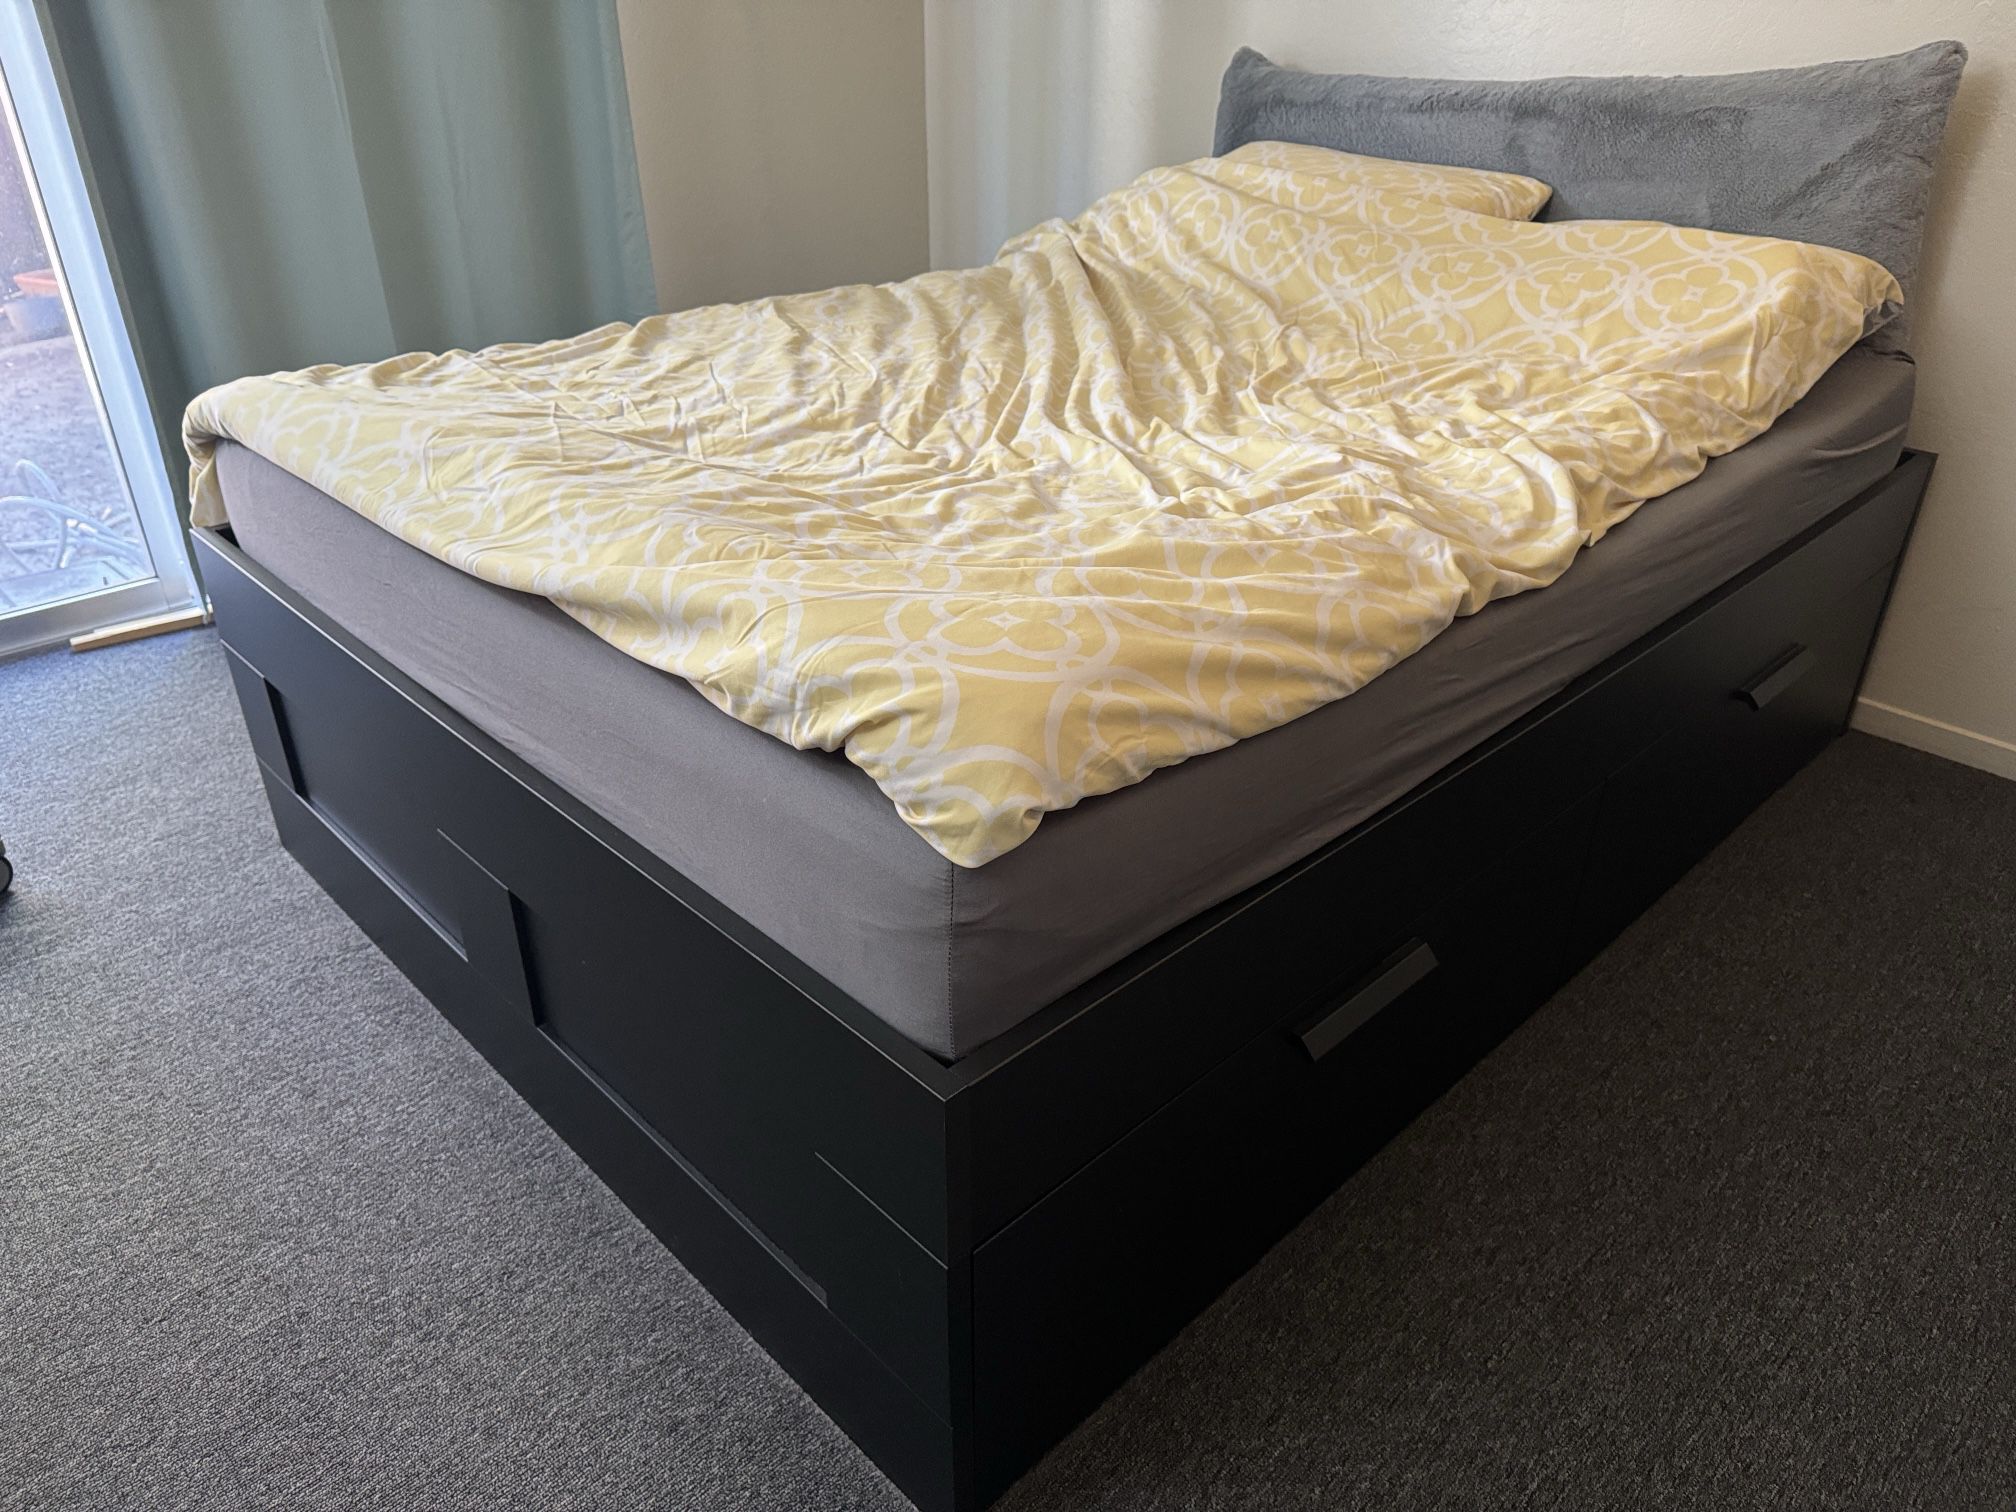 Ikea BRIMNES Bedframe - Full Size